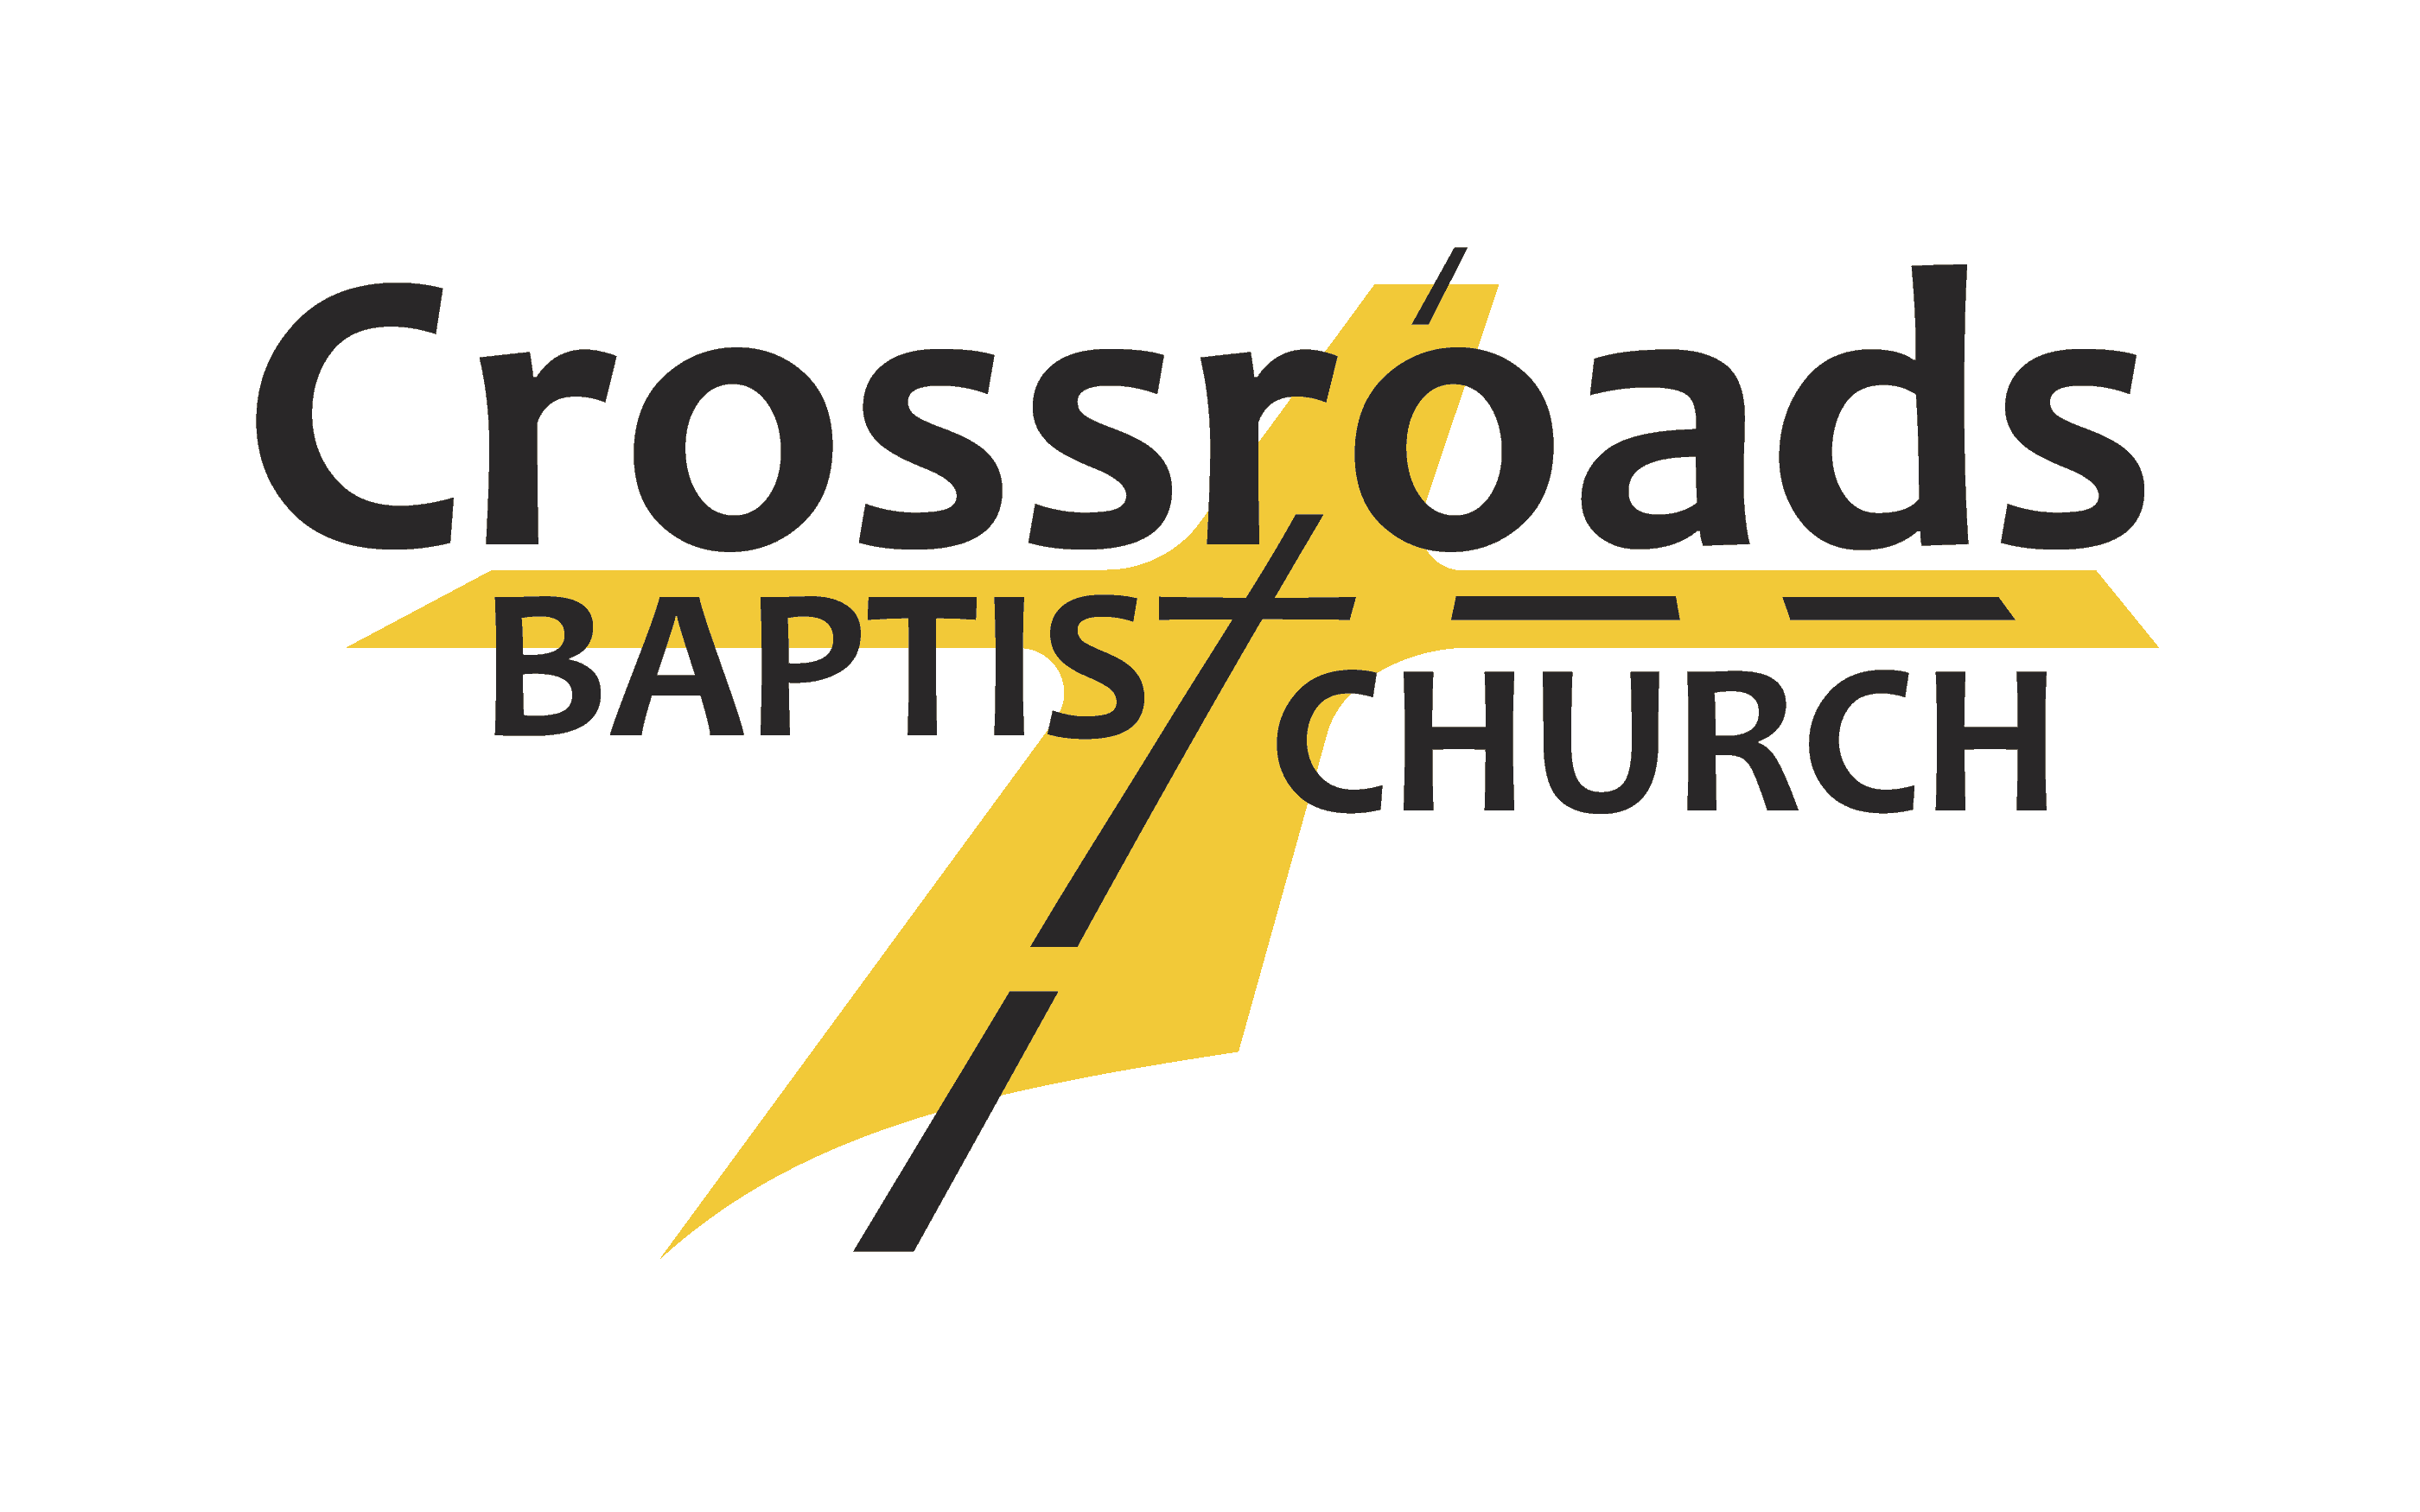 Crossroads Baptist